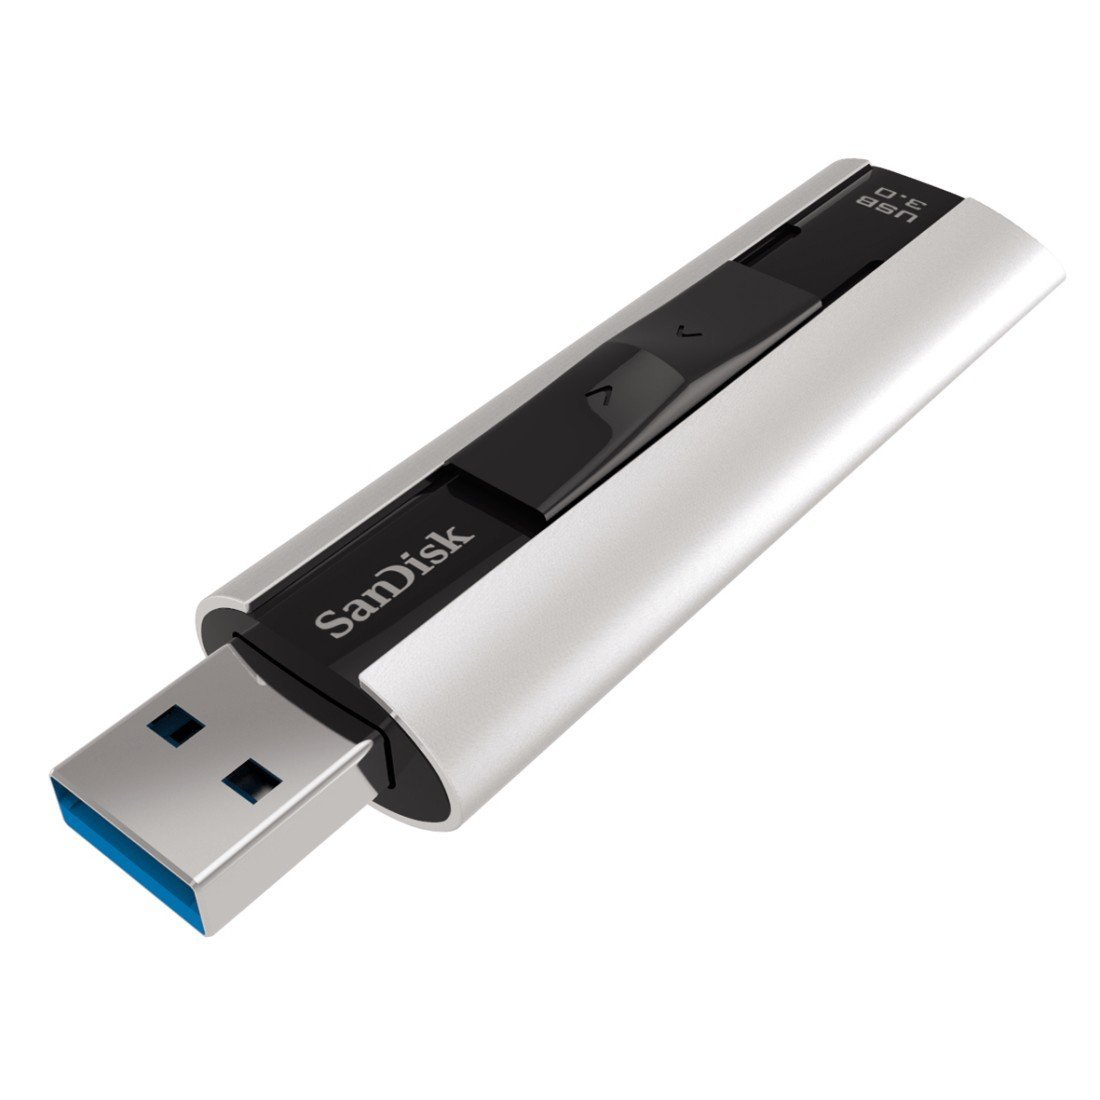 SanDisk Cruzer Extreme Pro 128GB USB